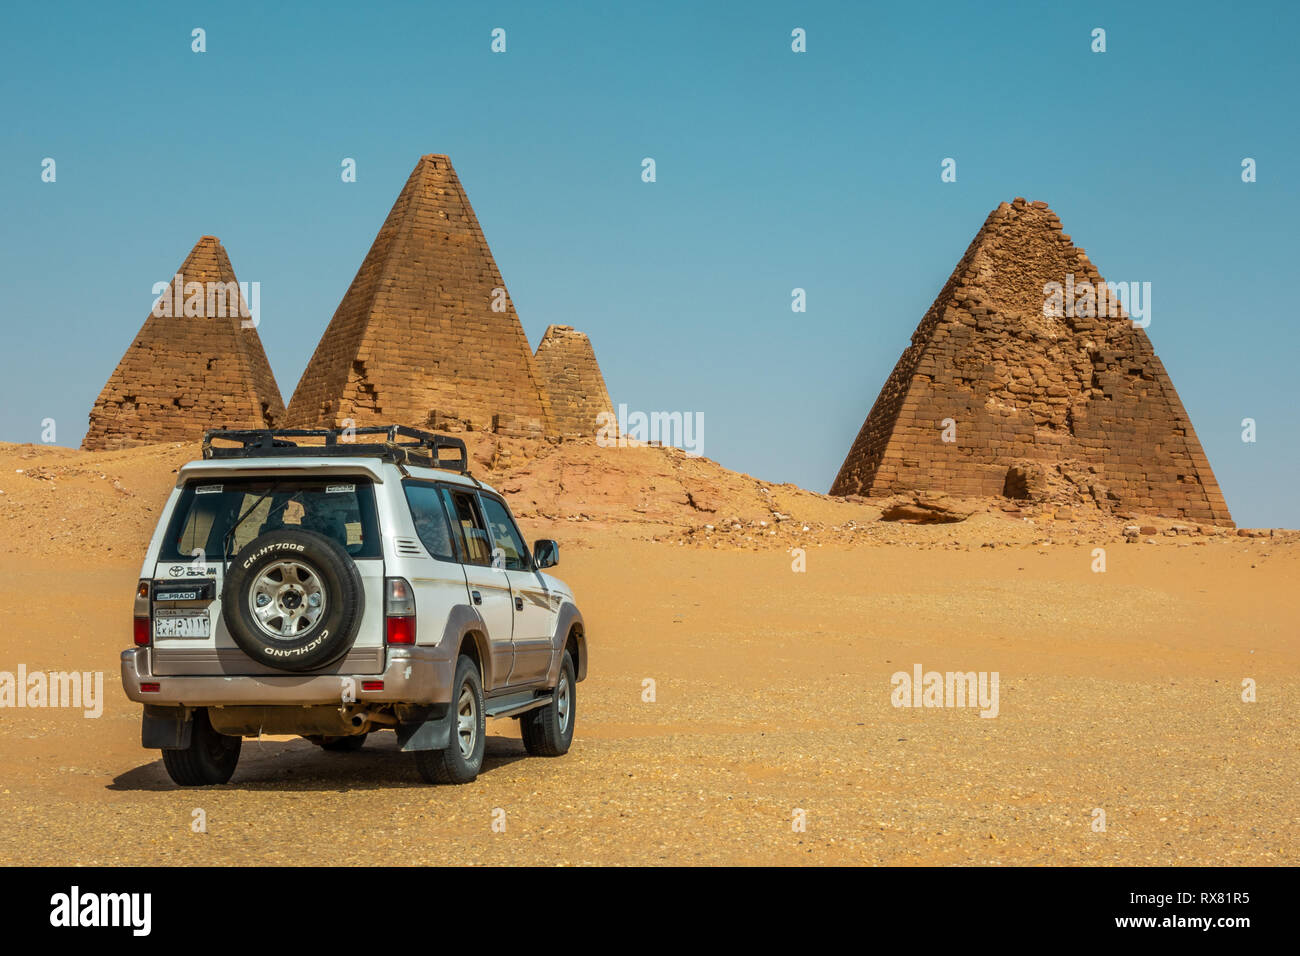 Nuri, Sudan, February 9., 2019: Off-road vehicle in the desert sand in front of three pyramids in Sudan Stock Photo